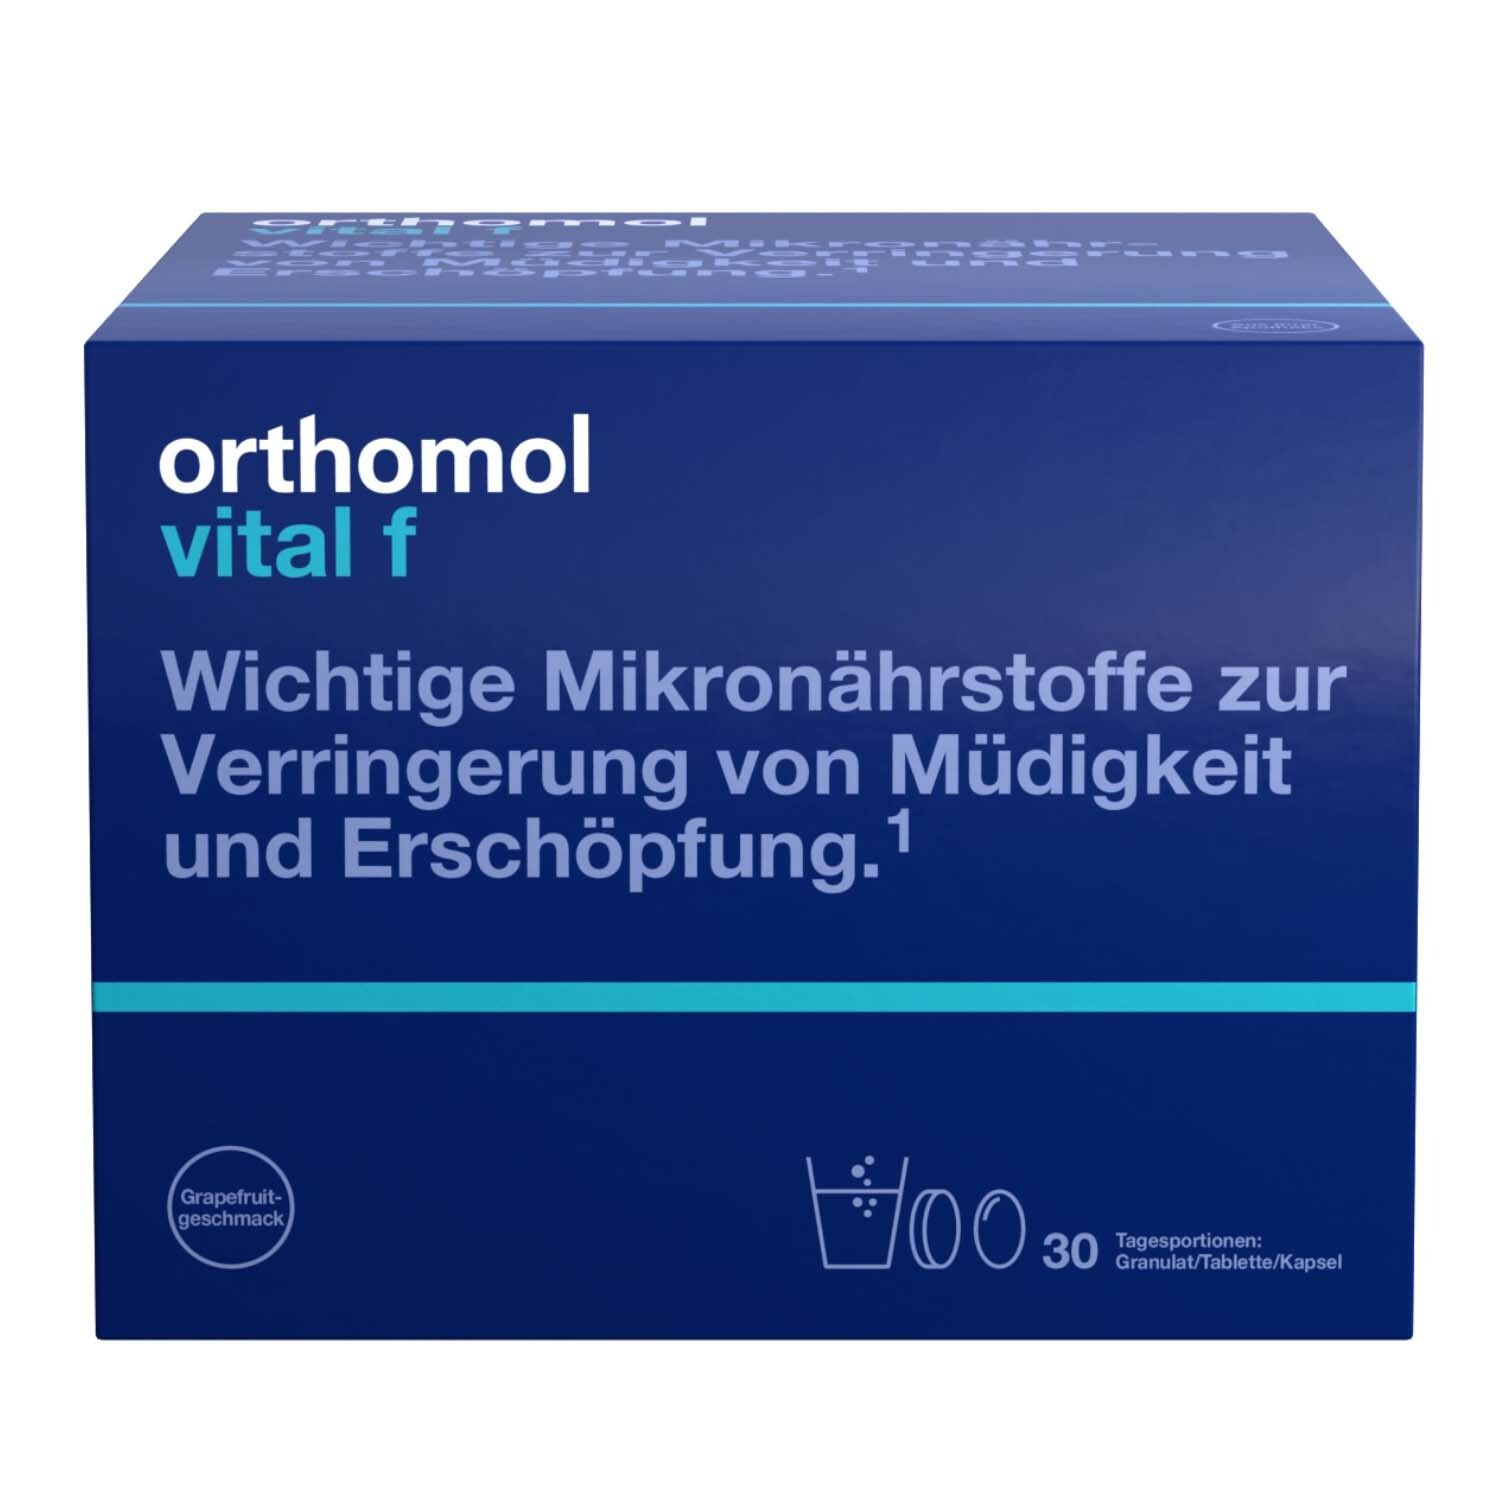 Orthomol Vital f für Frauen - bei Müdigkeit - mit B-Vitaminen, Omega-3, Magnesium - Granulat/Tabletten/Kapseln - Grapefruit-Geschmack